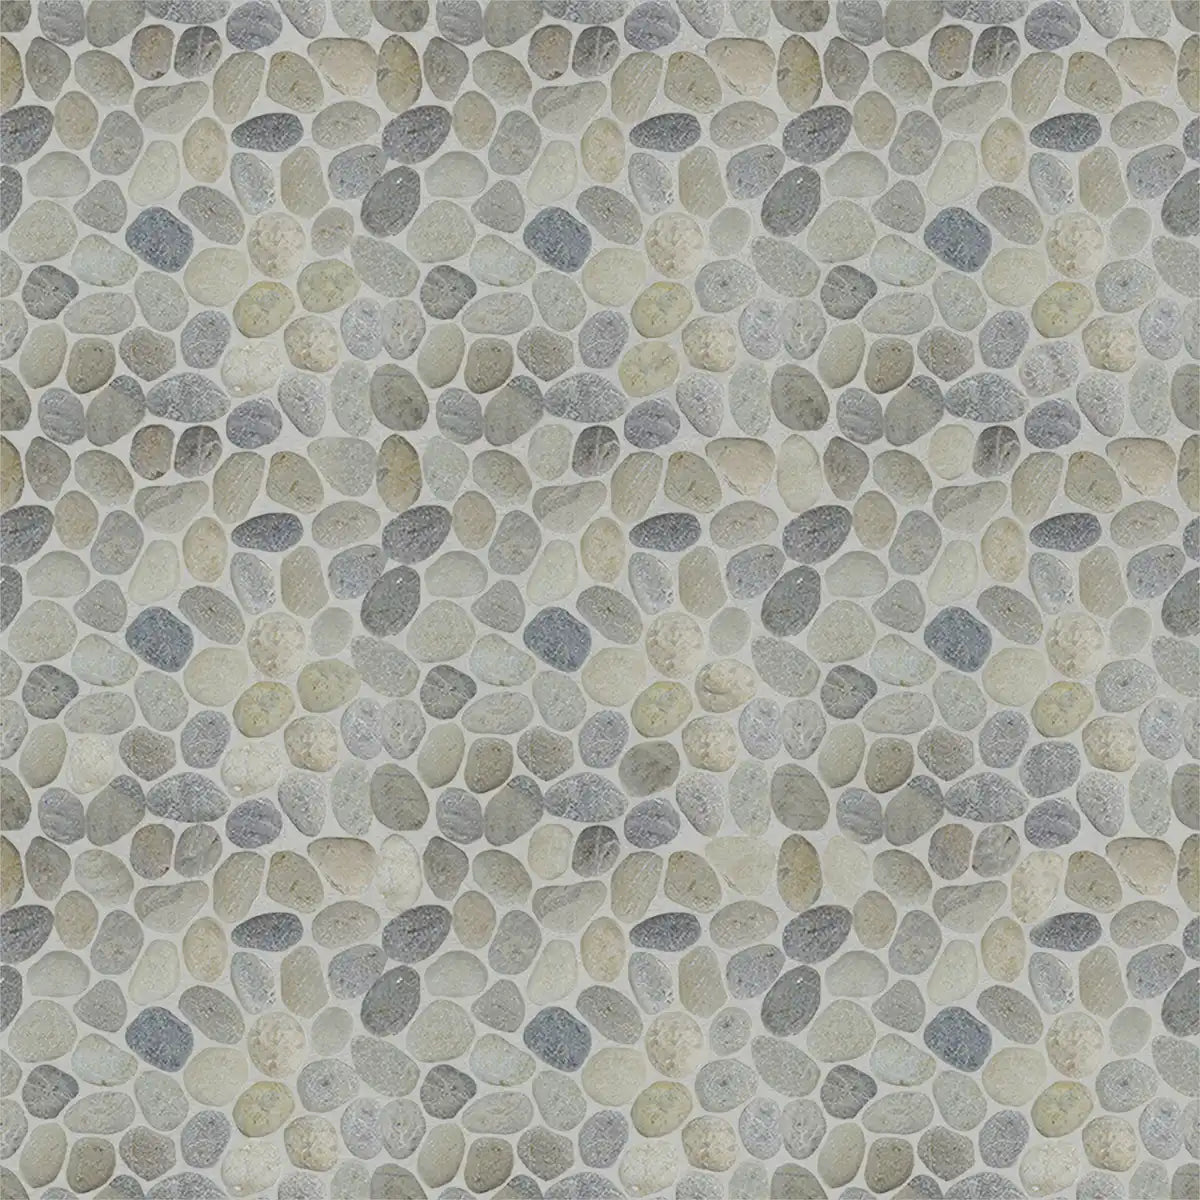 Pebble Grey Stone Mosaic Tiles, Natural Stone Floor Tile